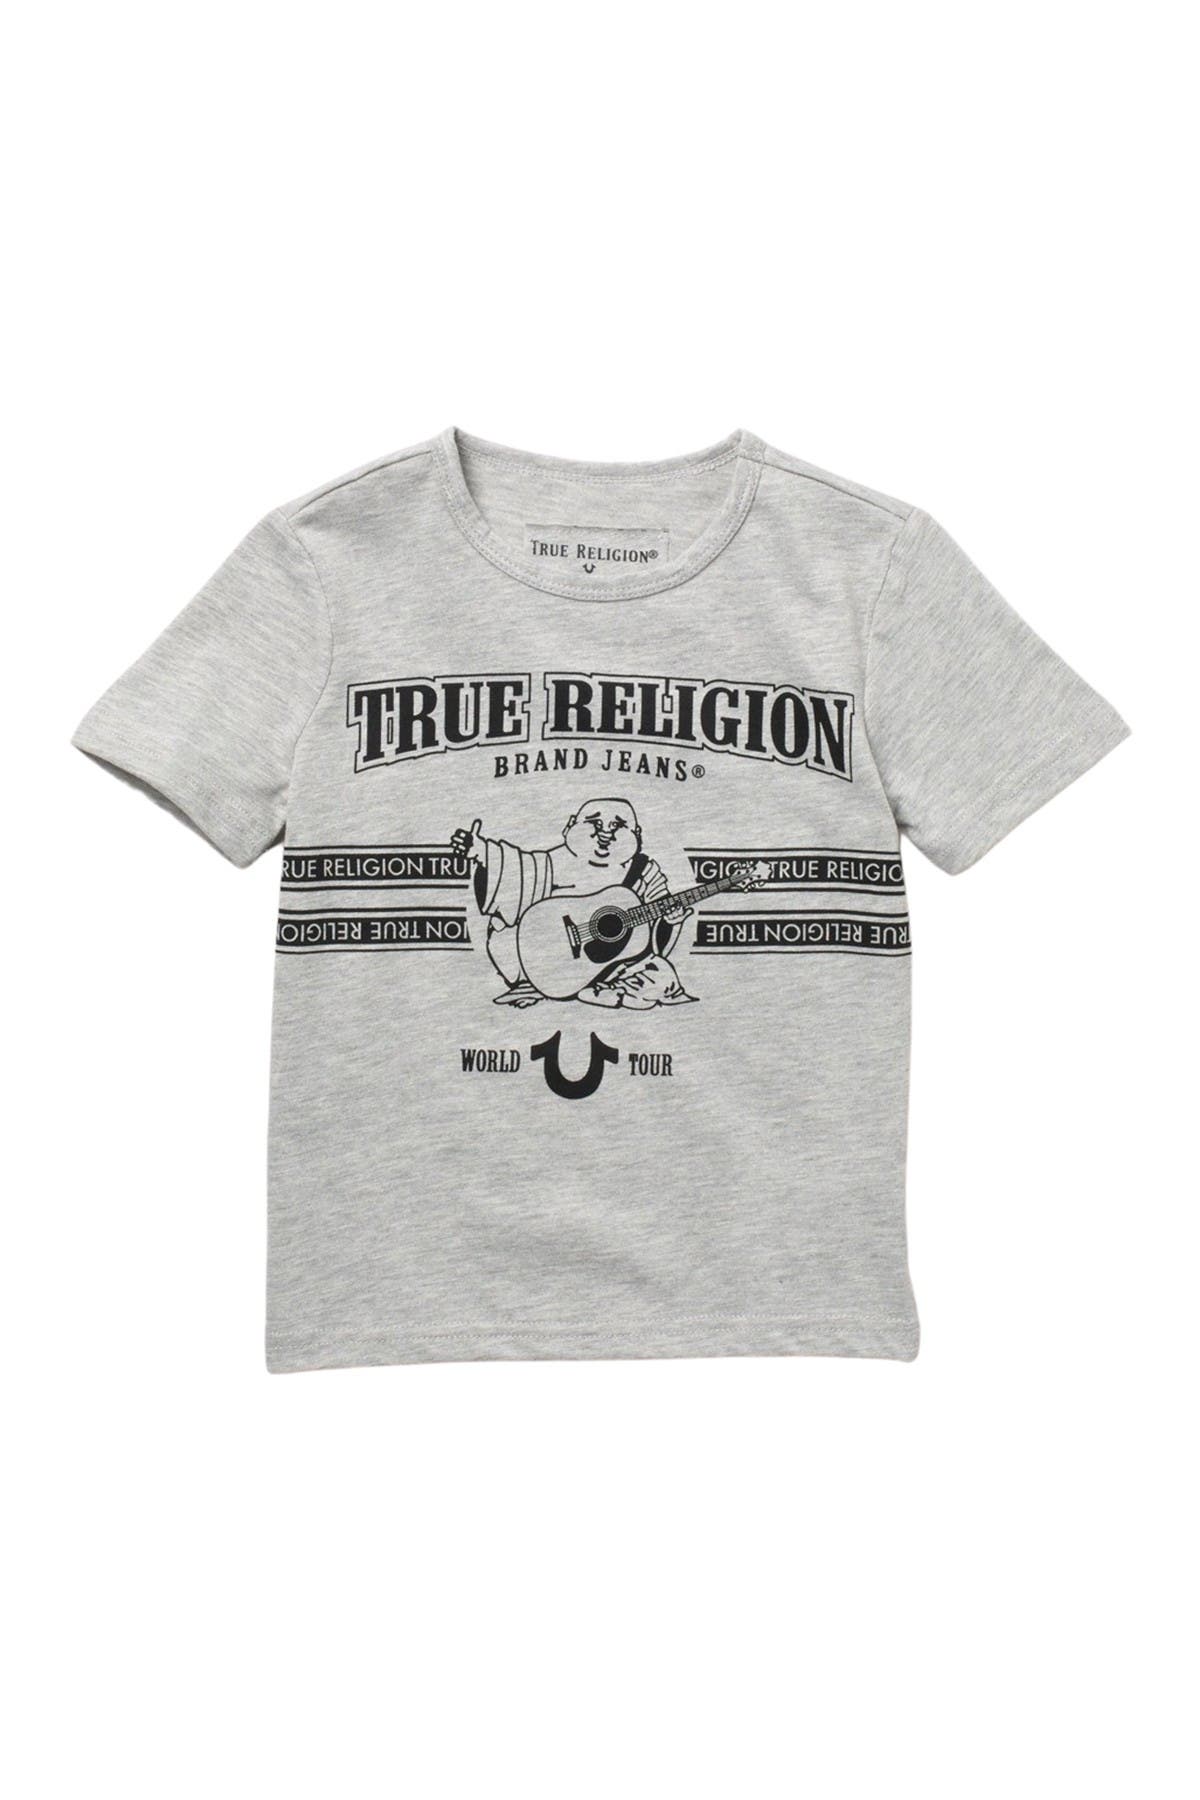 nordstrom rack true religion